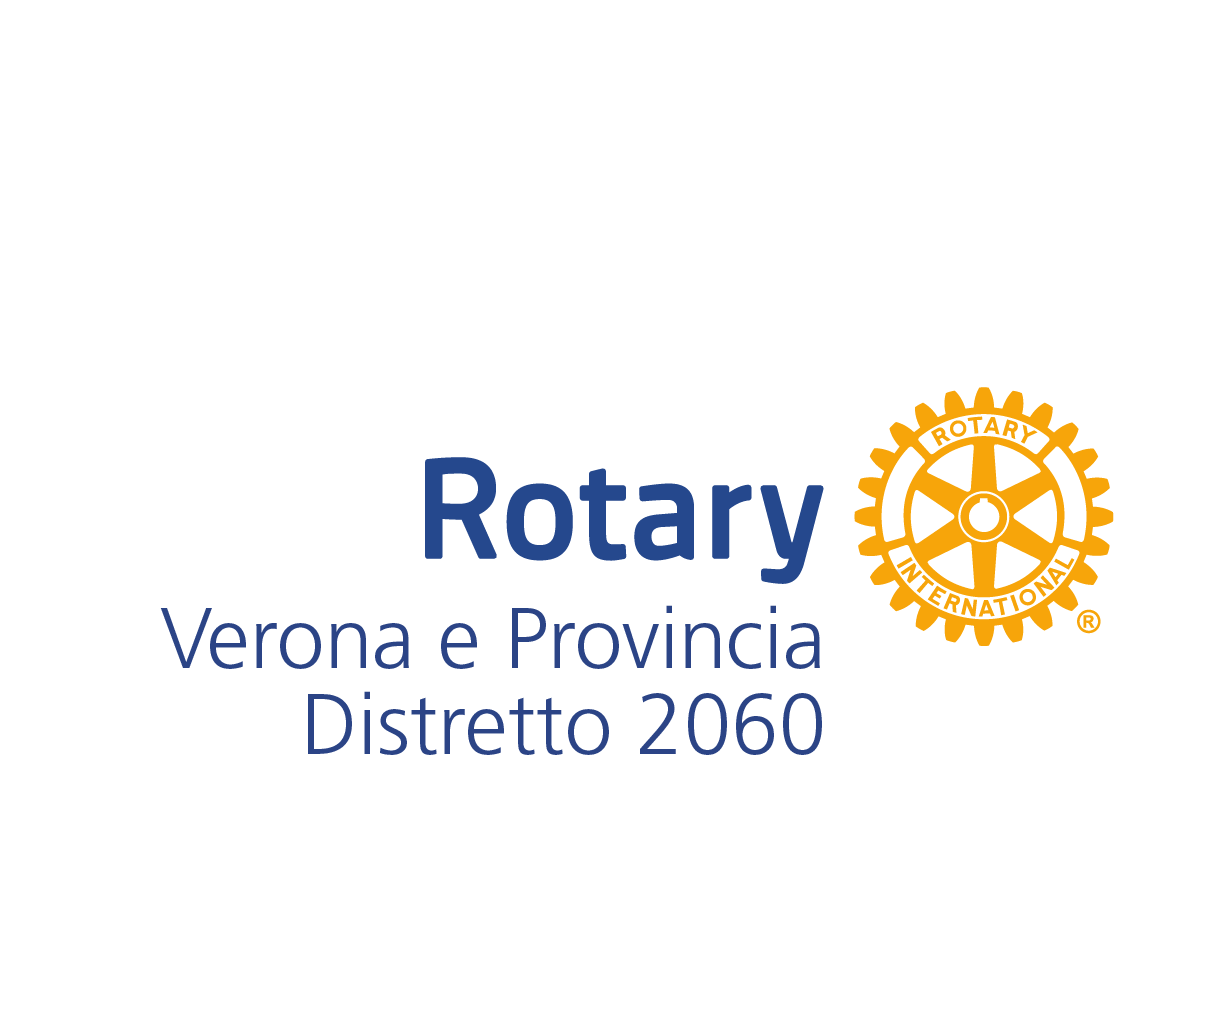 Rotary Club di Verona e Provincia